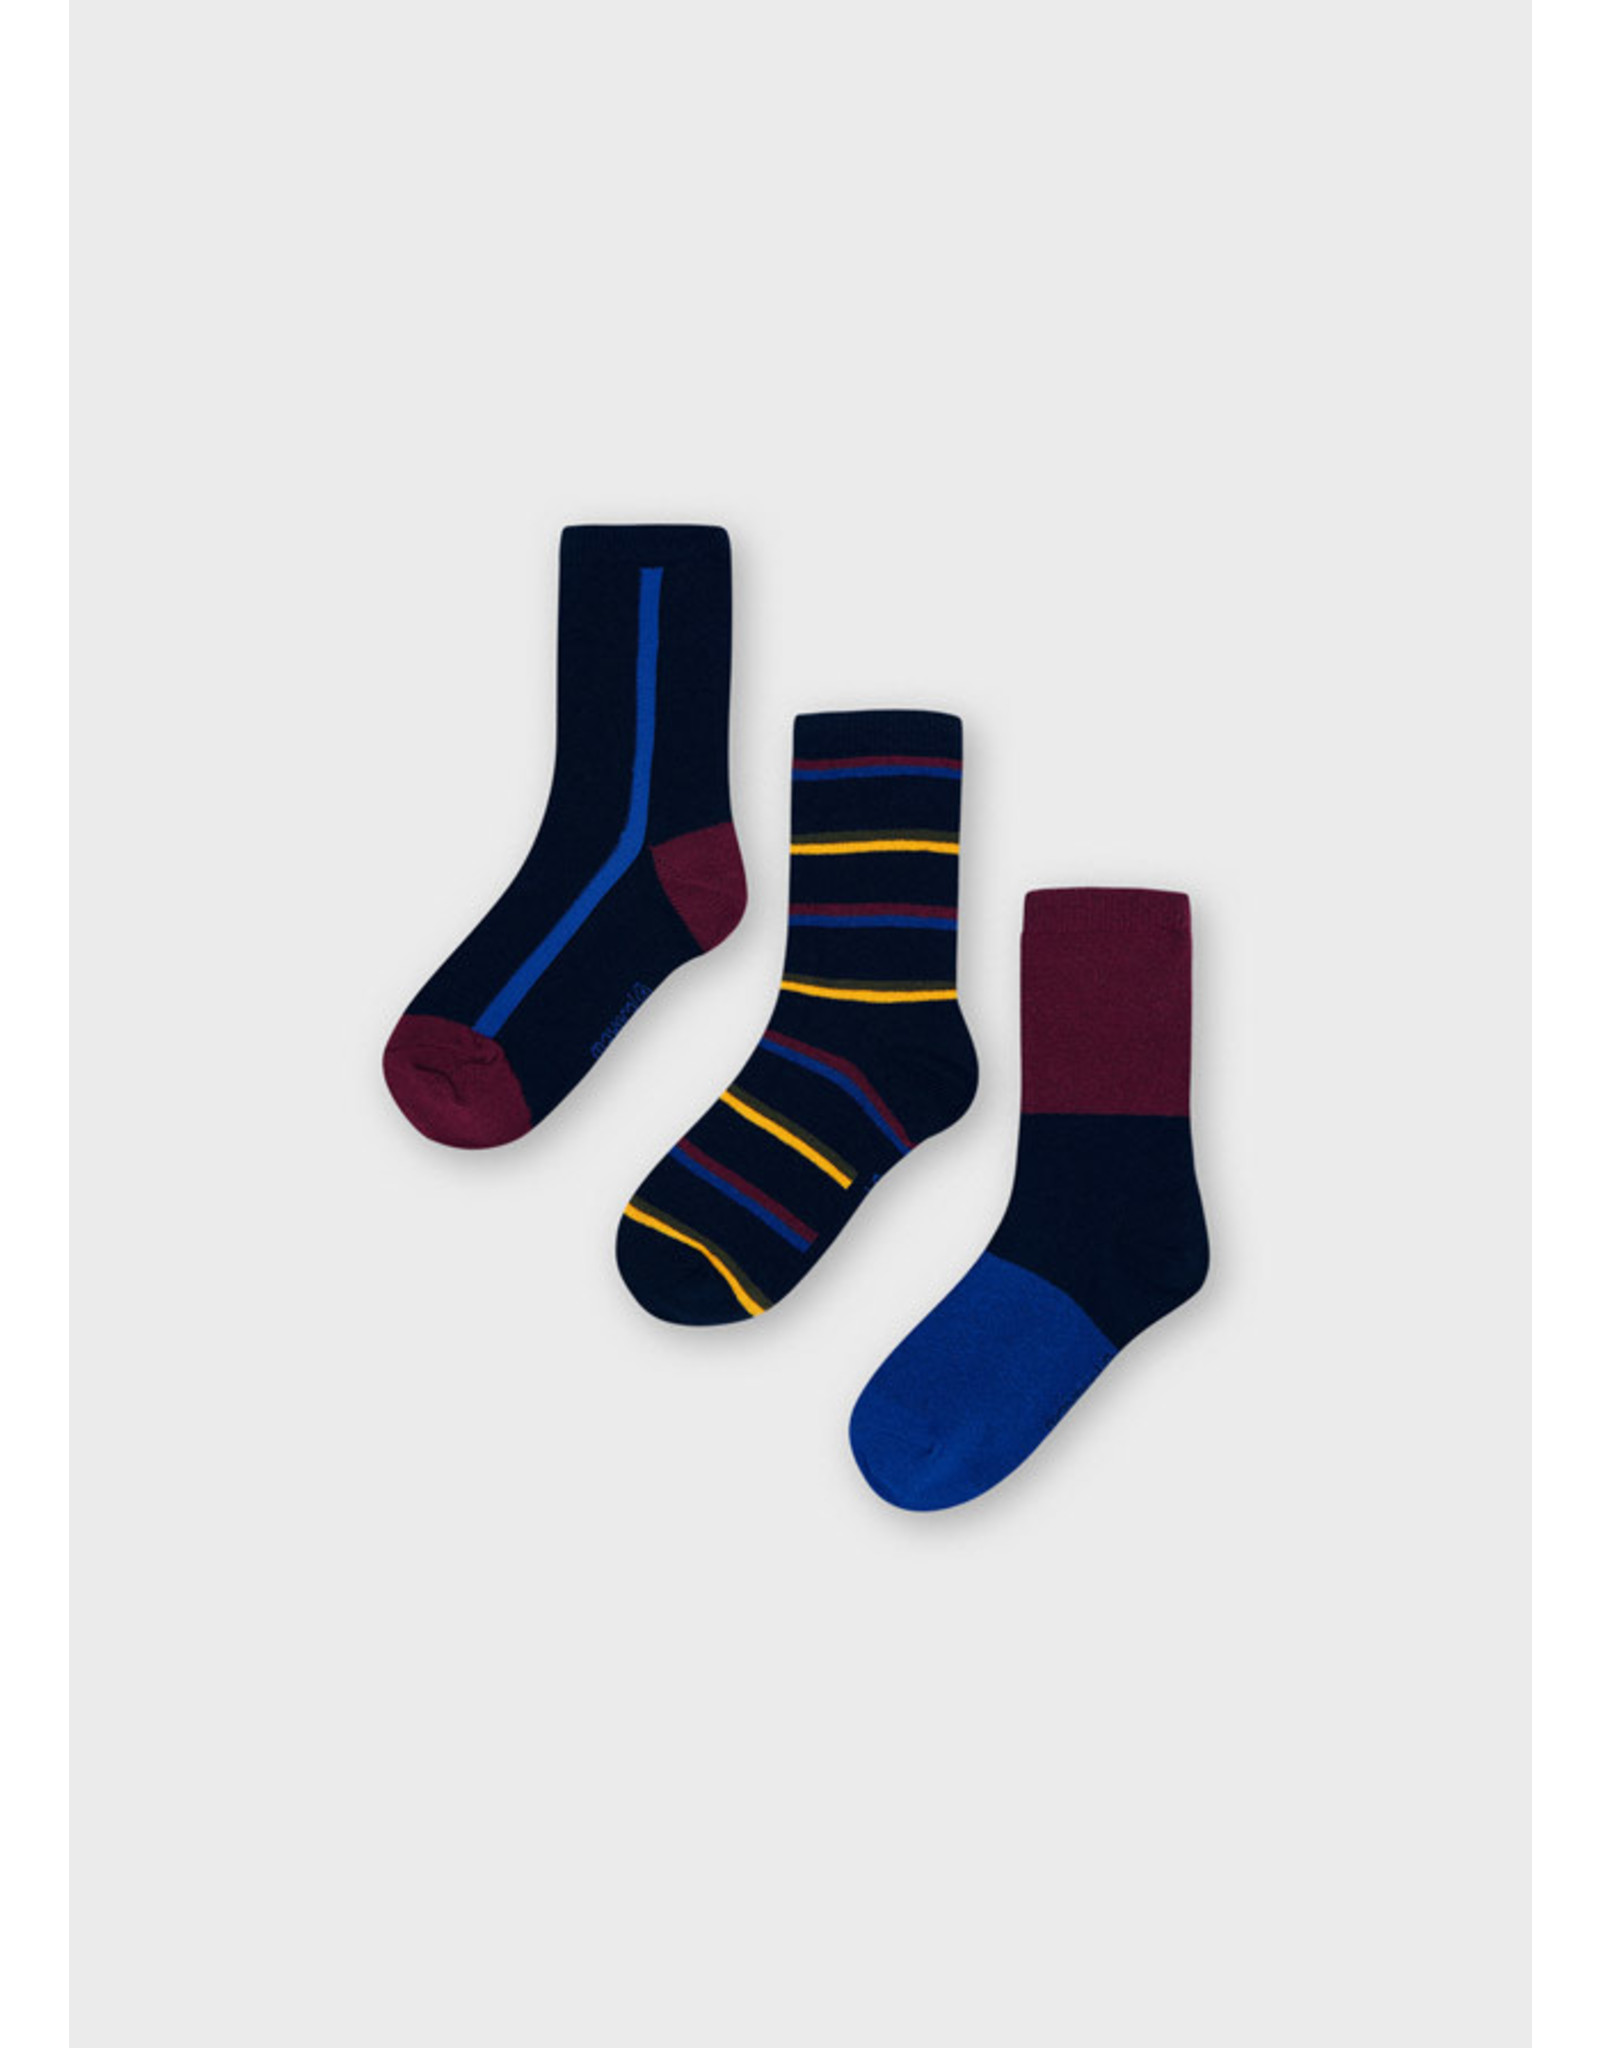 Mayoral Maroon Striped Socks Set (2 pairs)